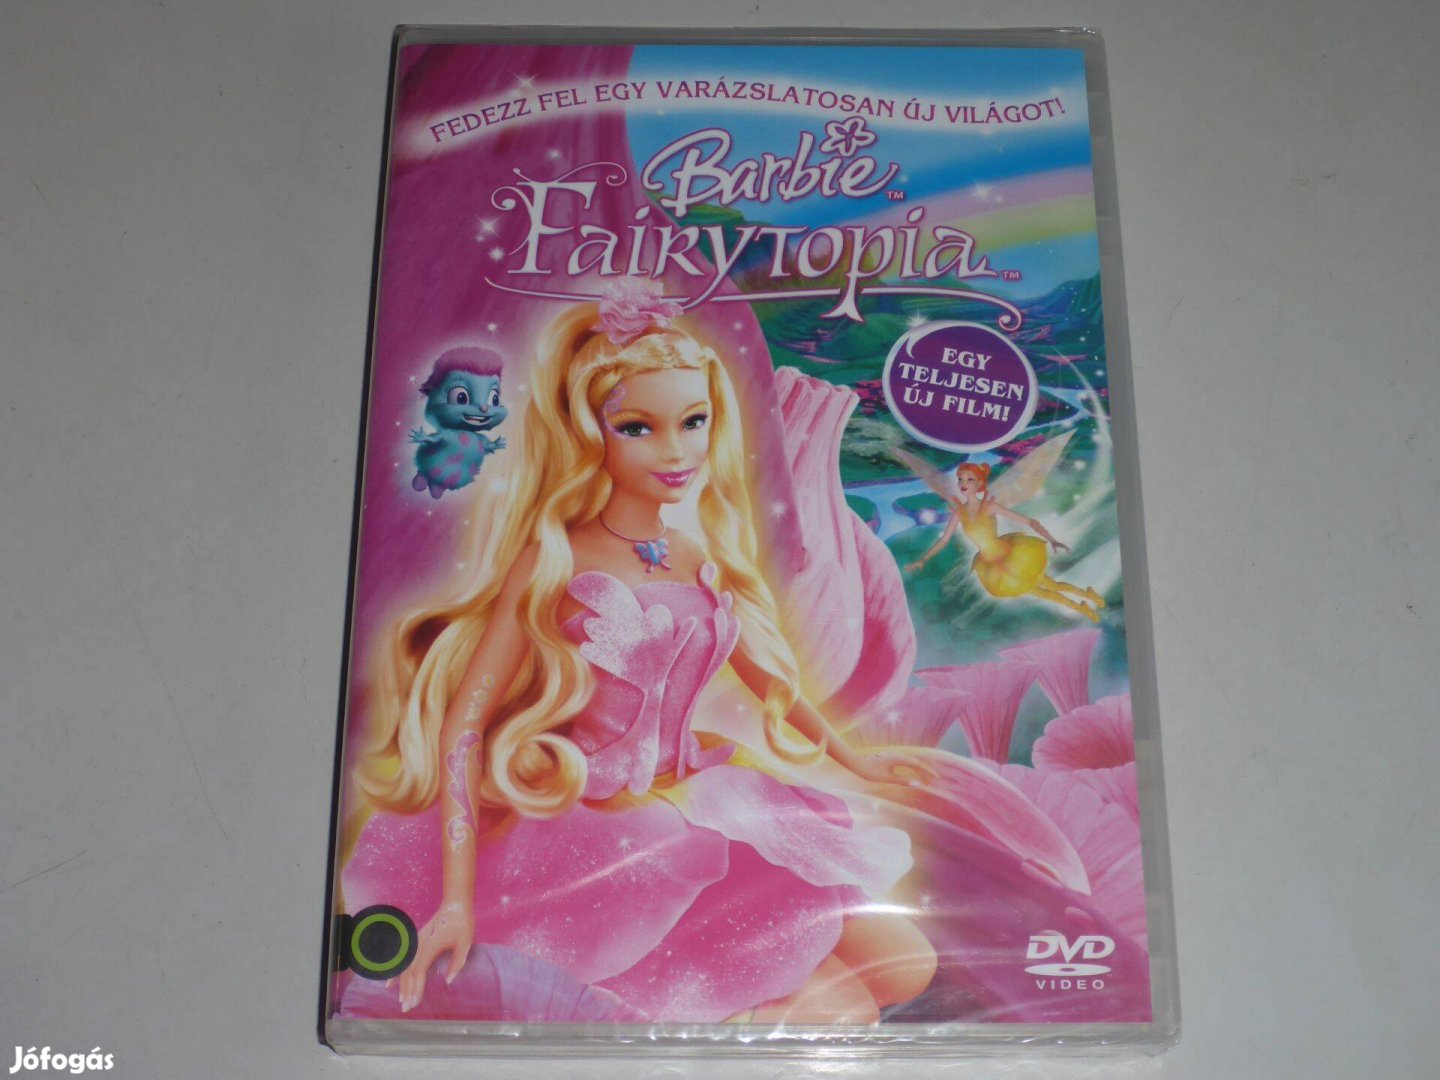 Barbie - Fairytopia DVD film